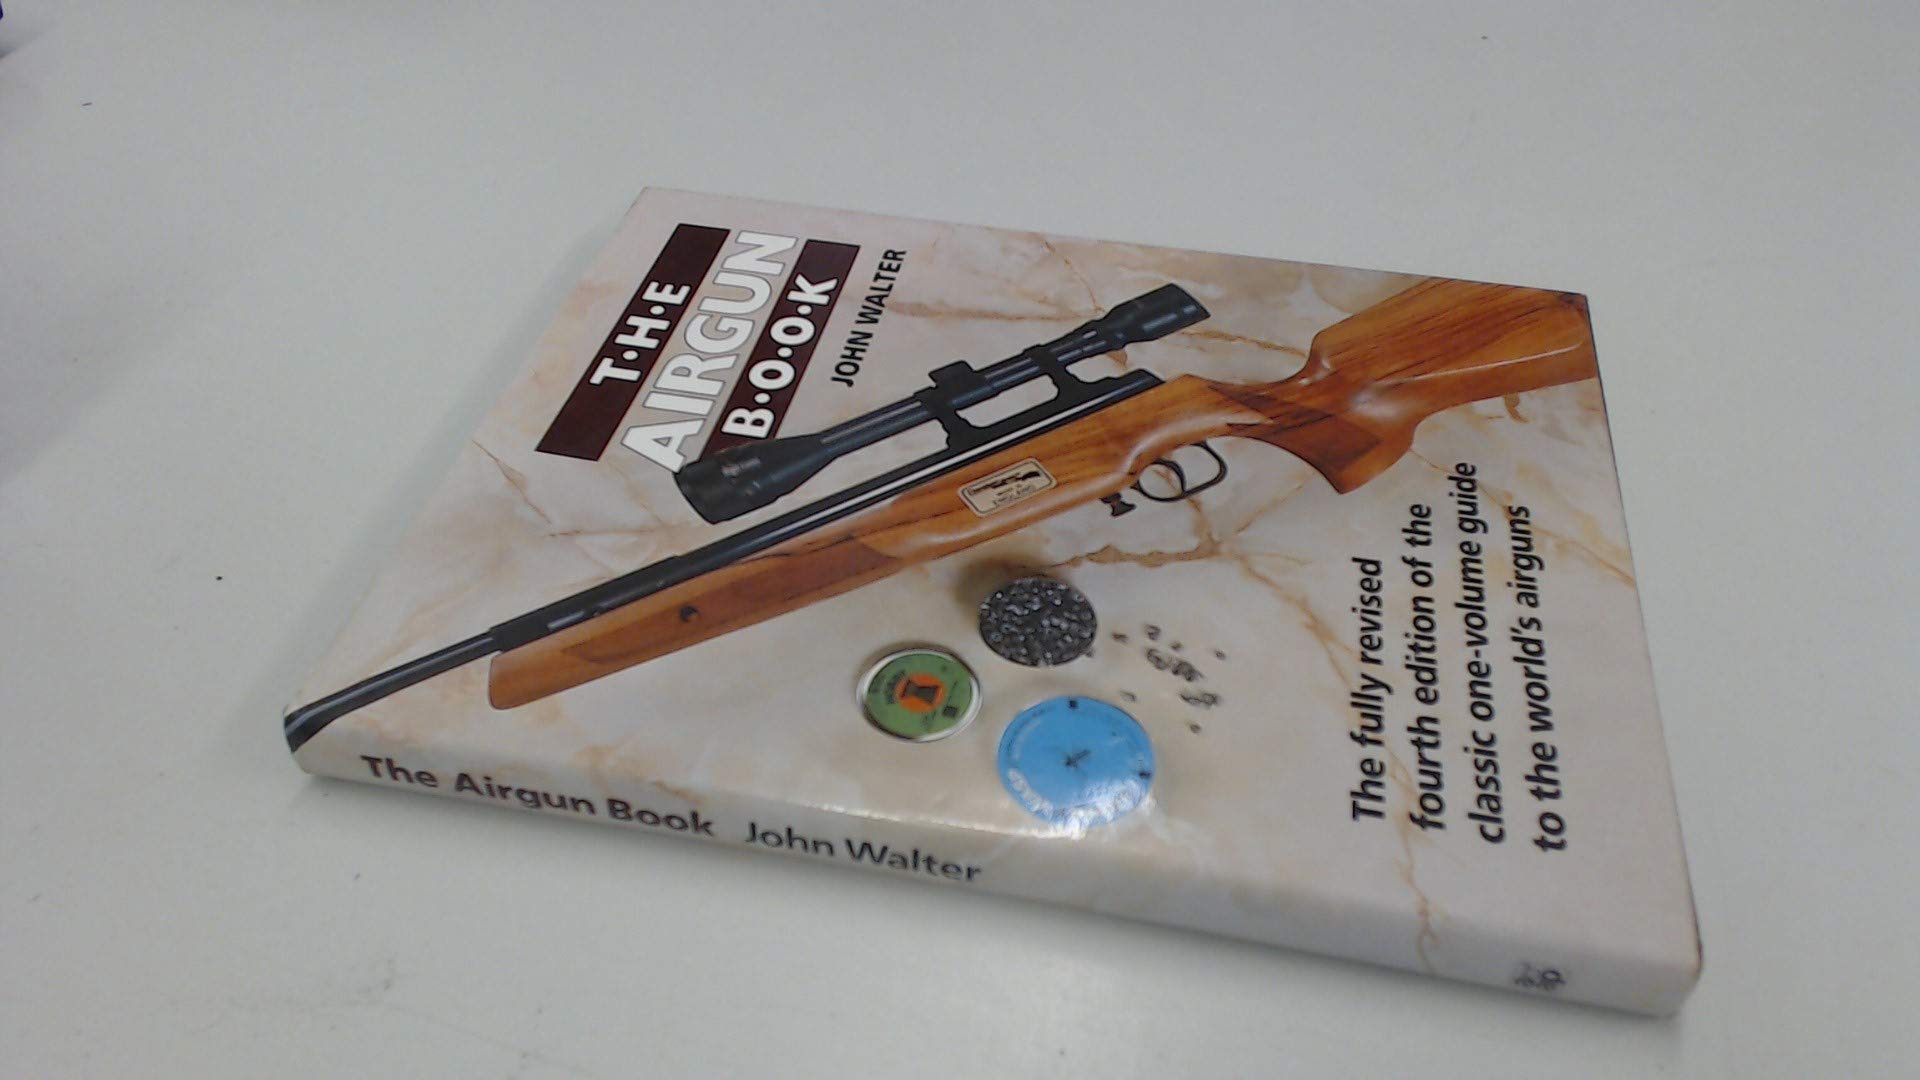 Airgun Book John Walter Amazon Books